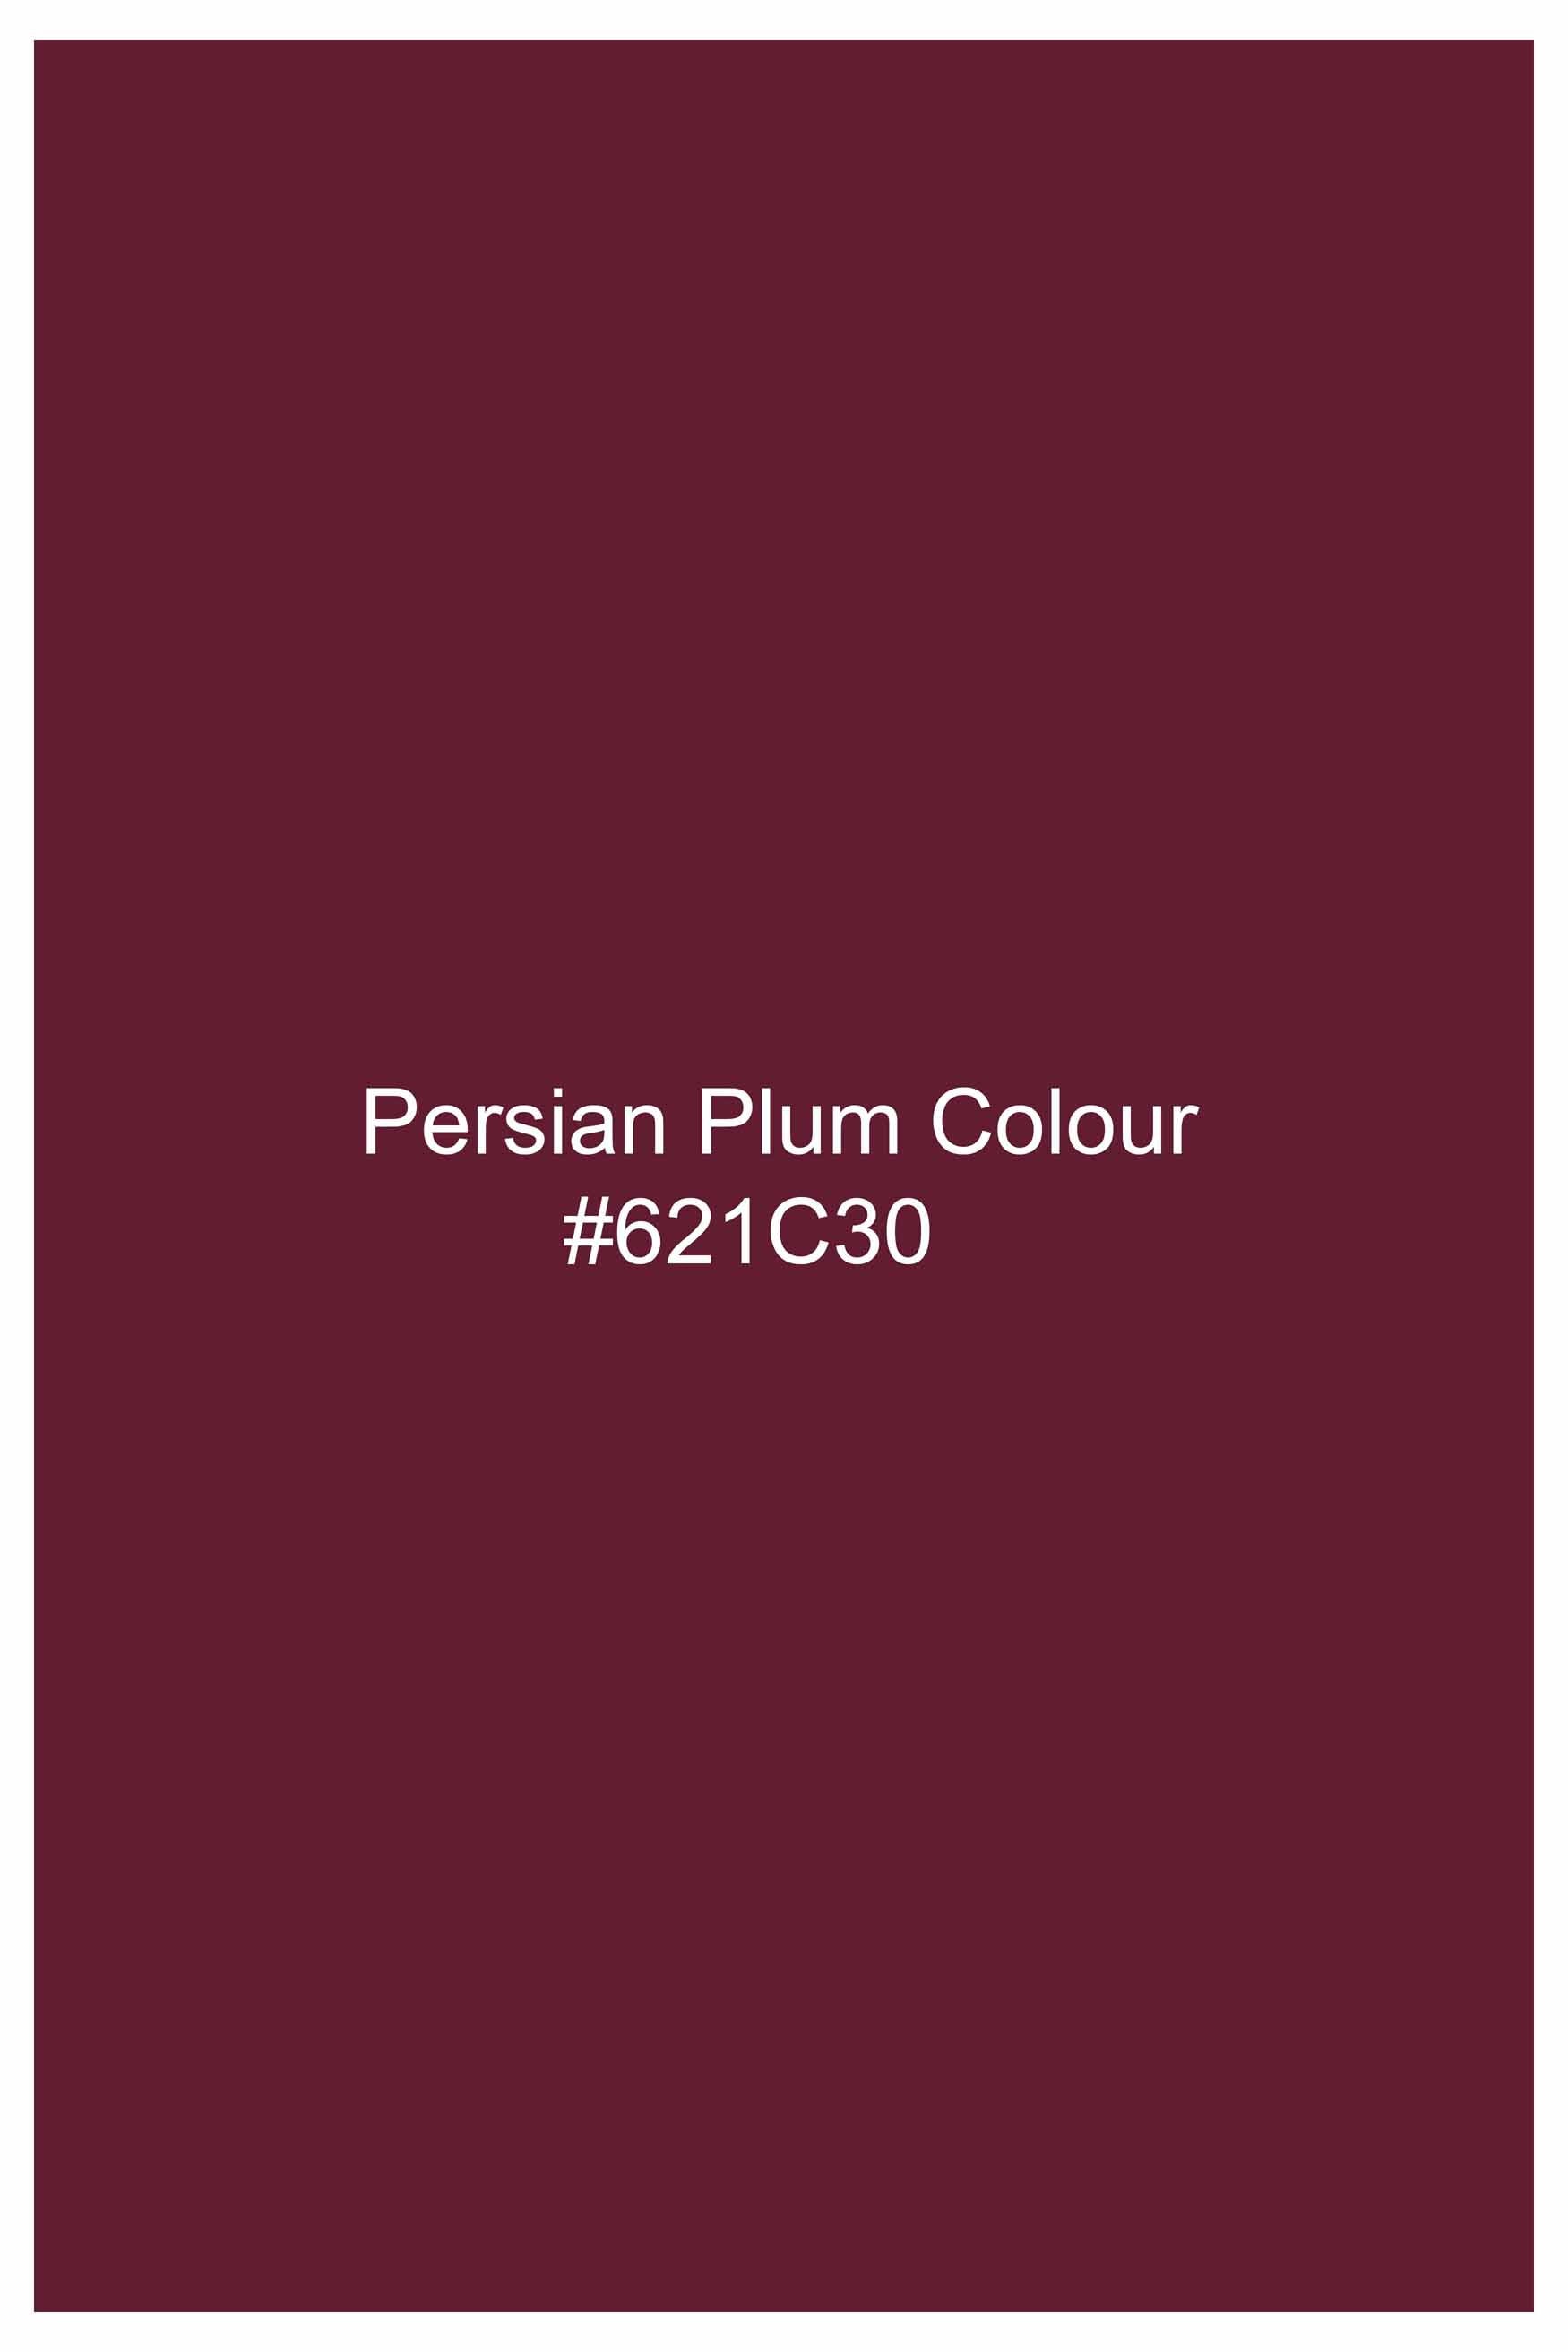 Persian Plum Maroon Subtle Sheen Super Soft Premium Cotton Tuxedo Shirt